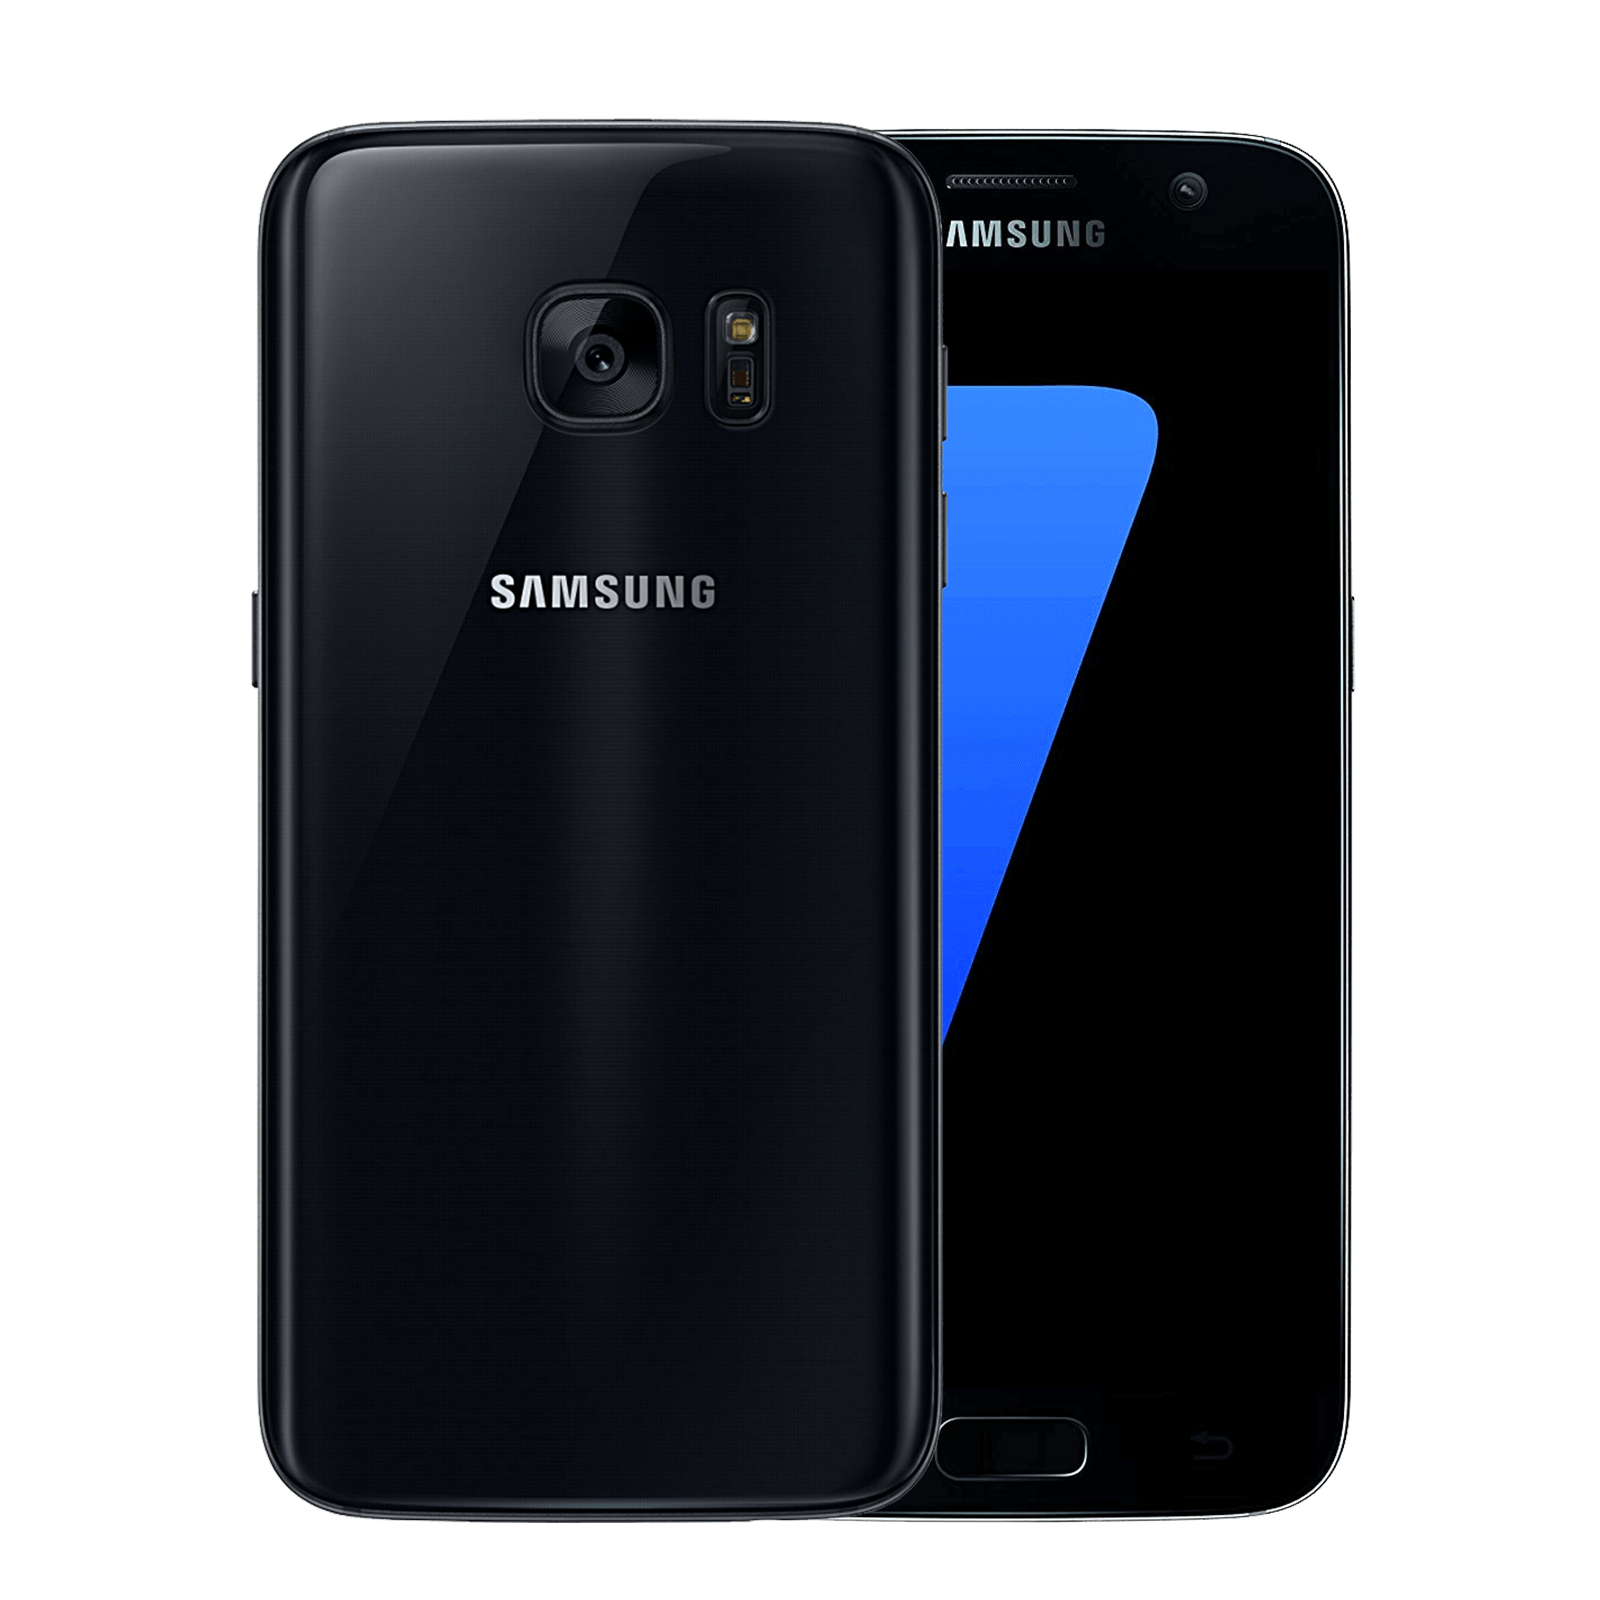 Samsung Galaxy S7 32GB Black Pristine - Unlocked